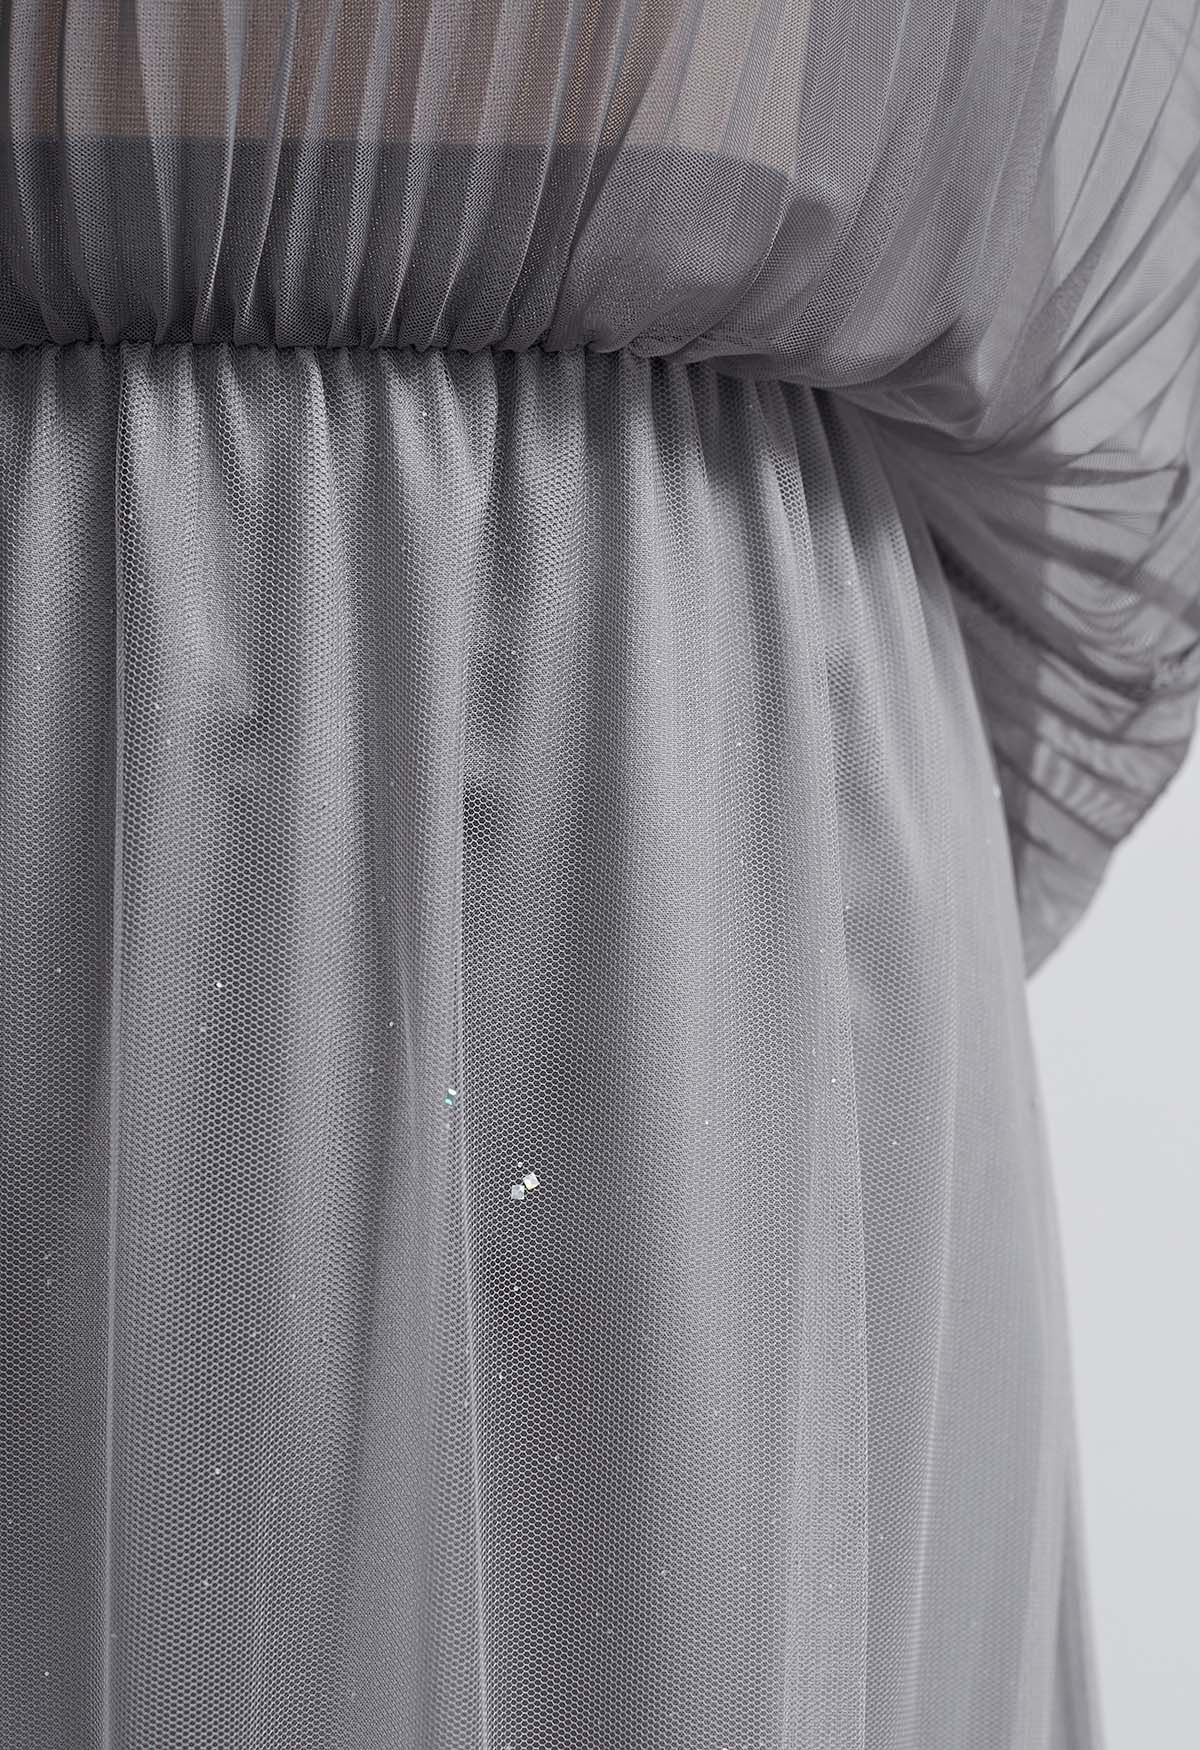 Glitter Trim Pleated Mesh Tulle Skirt in Grey